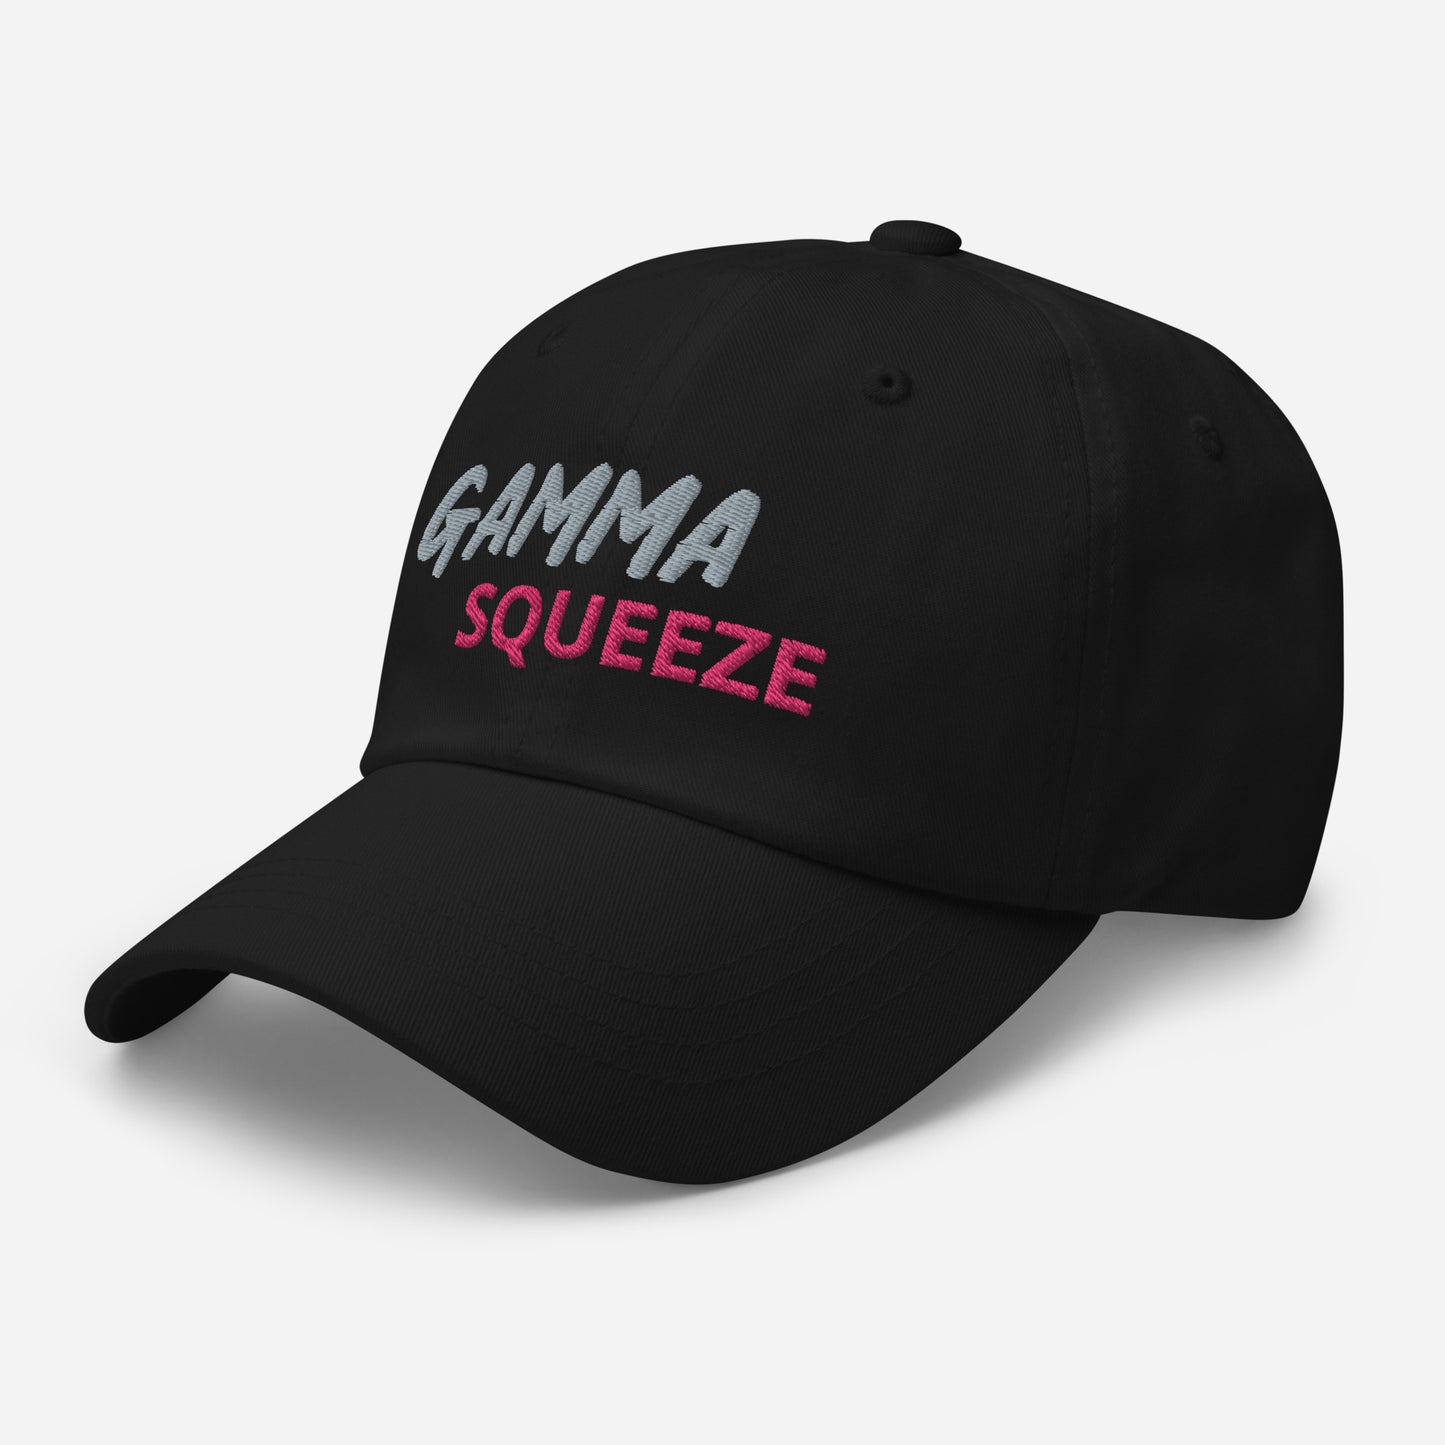 Gamma Squeeze Hat